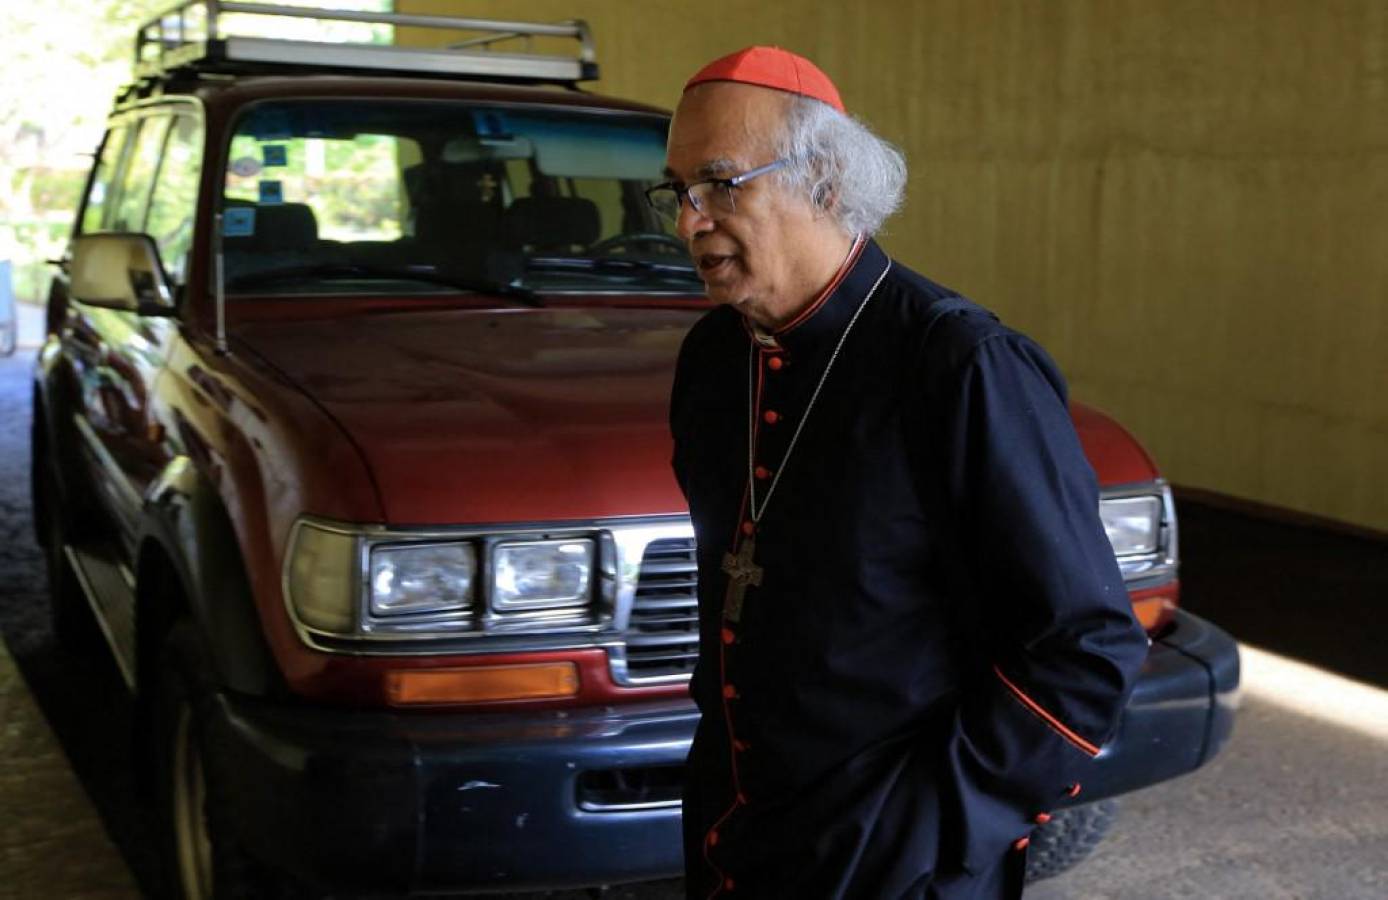 Nicaragua: Cardenal confirma bloqueo de cuentas investigadas por lavado